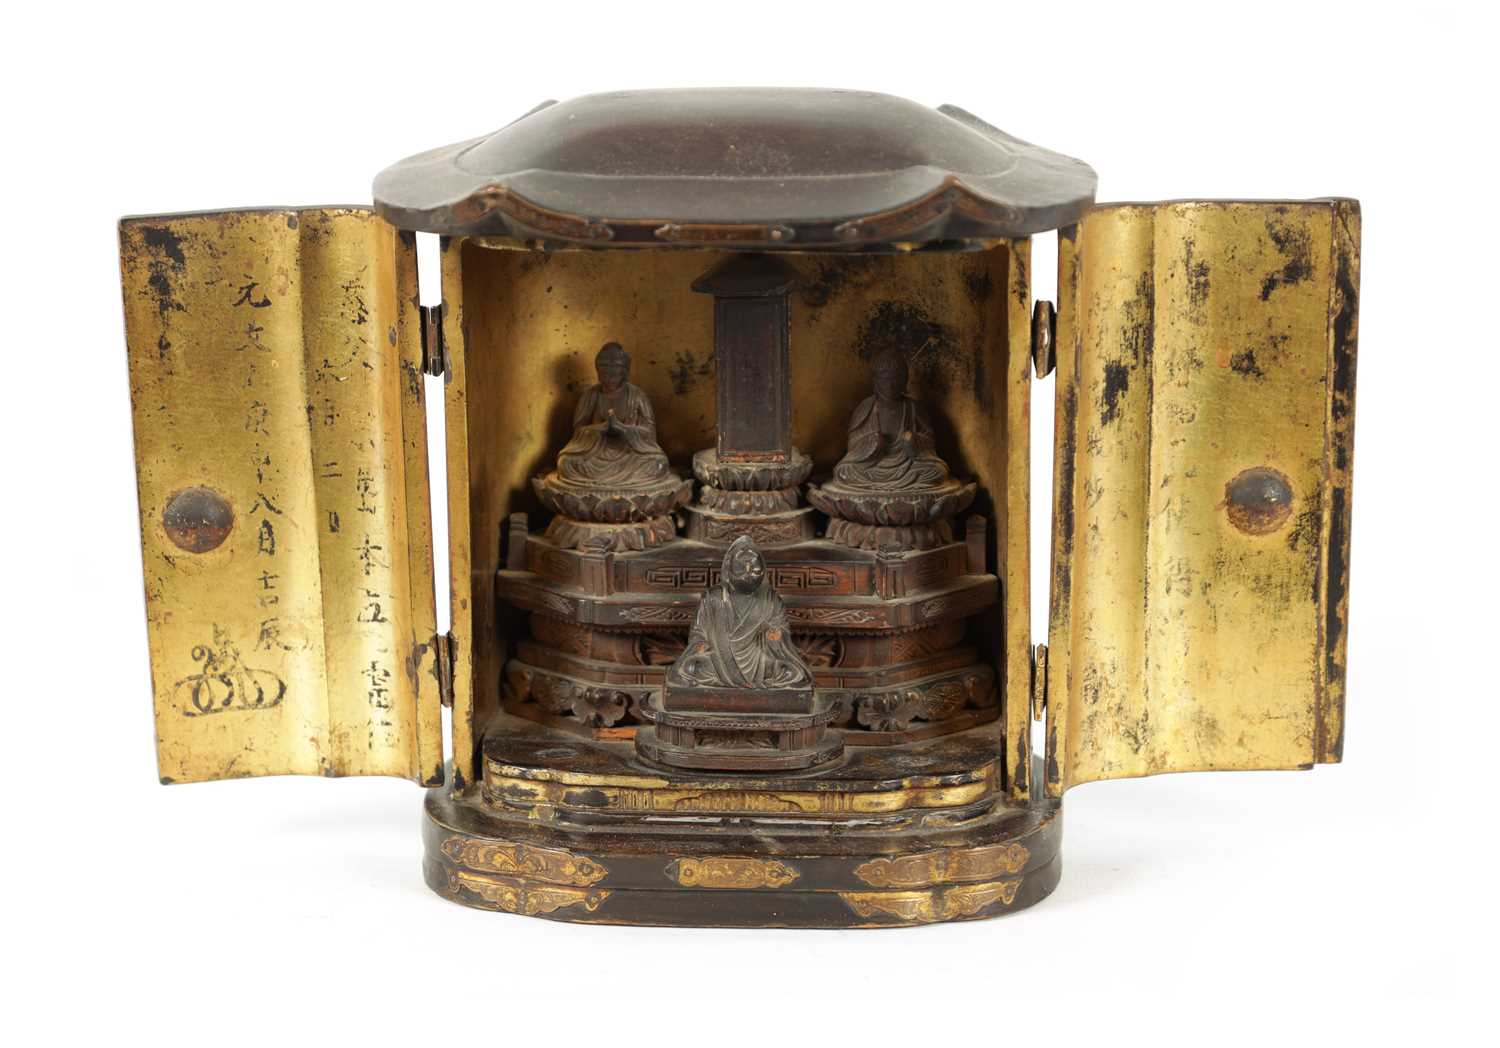 Lot 538 - A 19TH CENTURY BLACK LACQUER BUDDHIST TRAVELLING PRAYER SHRINE